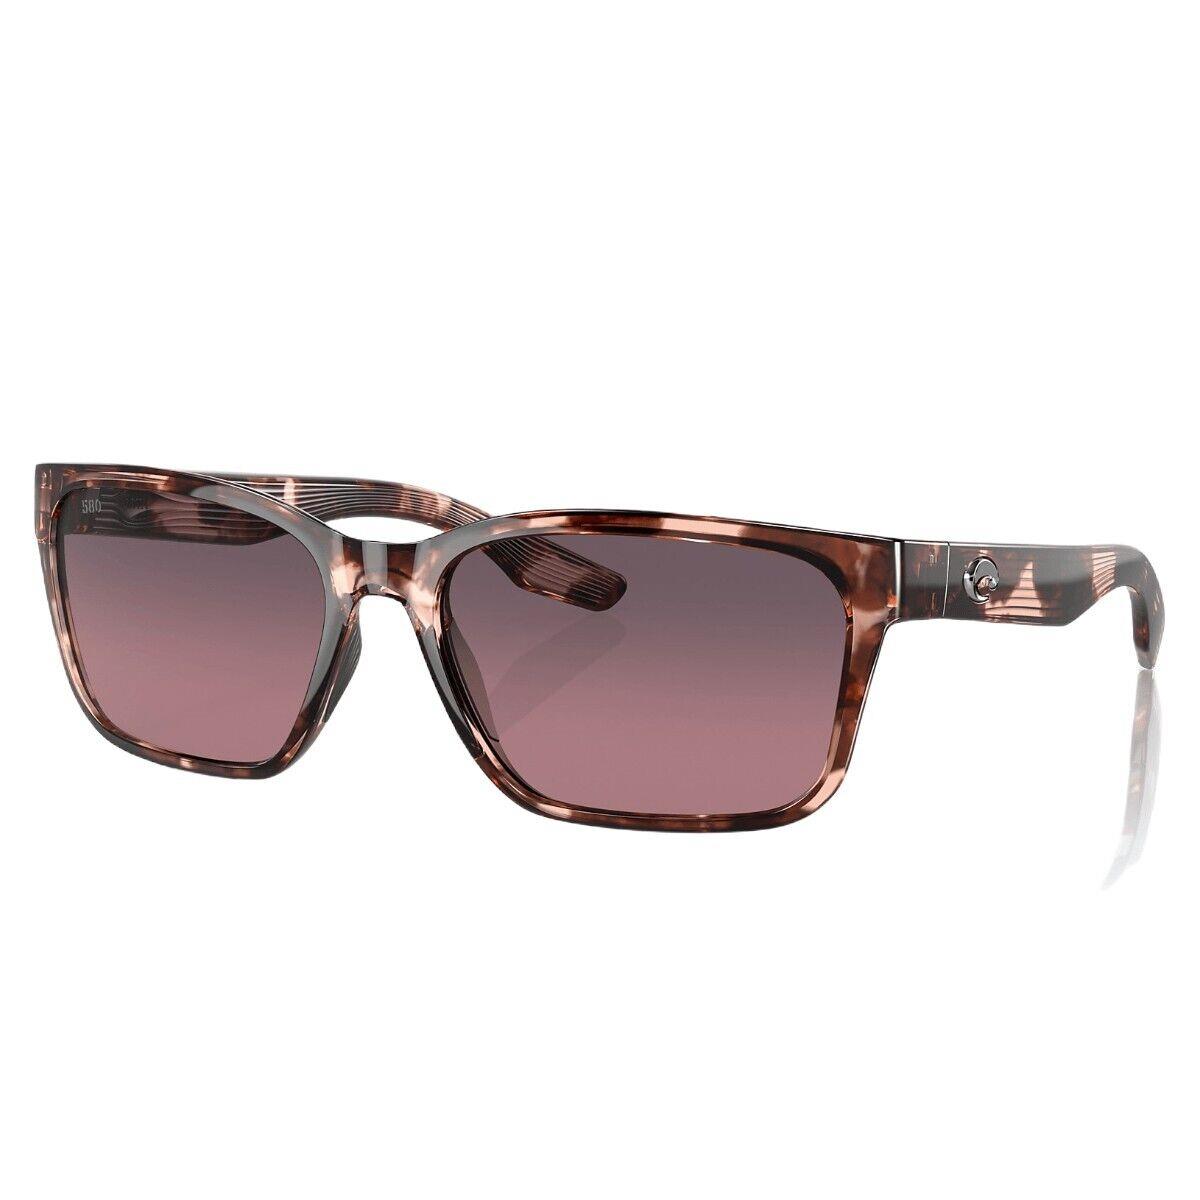 Costa Del Mar Palmas Sunglasses Coral Tortoise w/ Rose Gradient Glass Lens - Frame: Pink, Lens: Pink